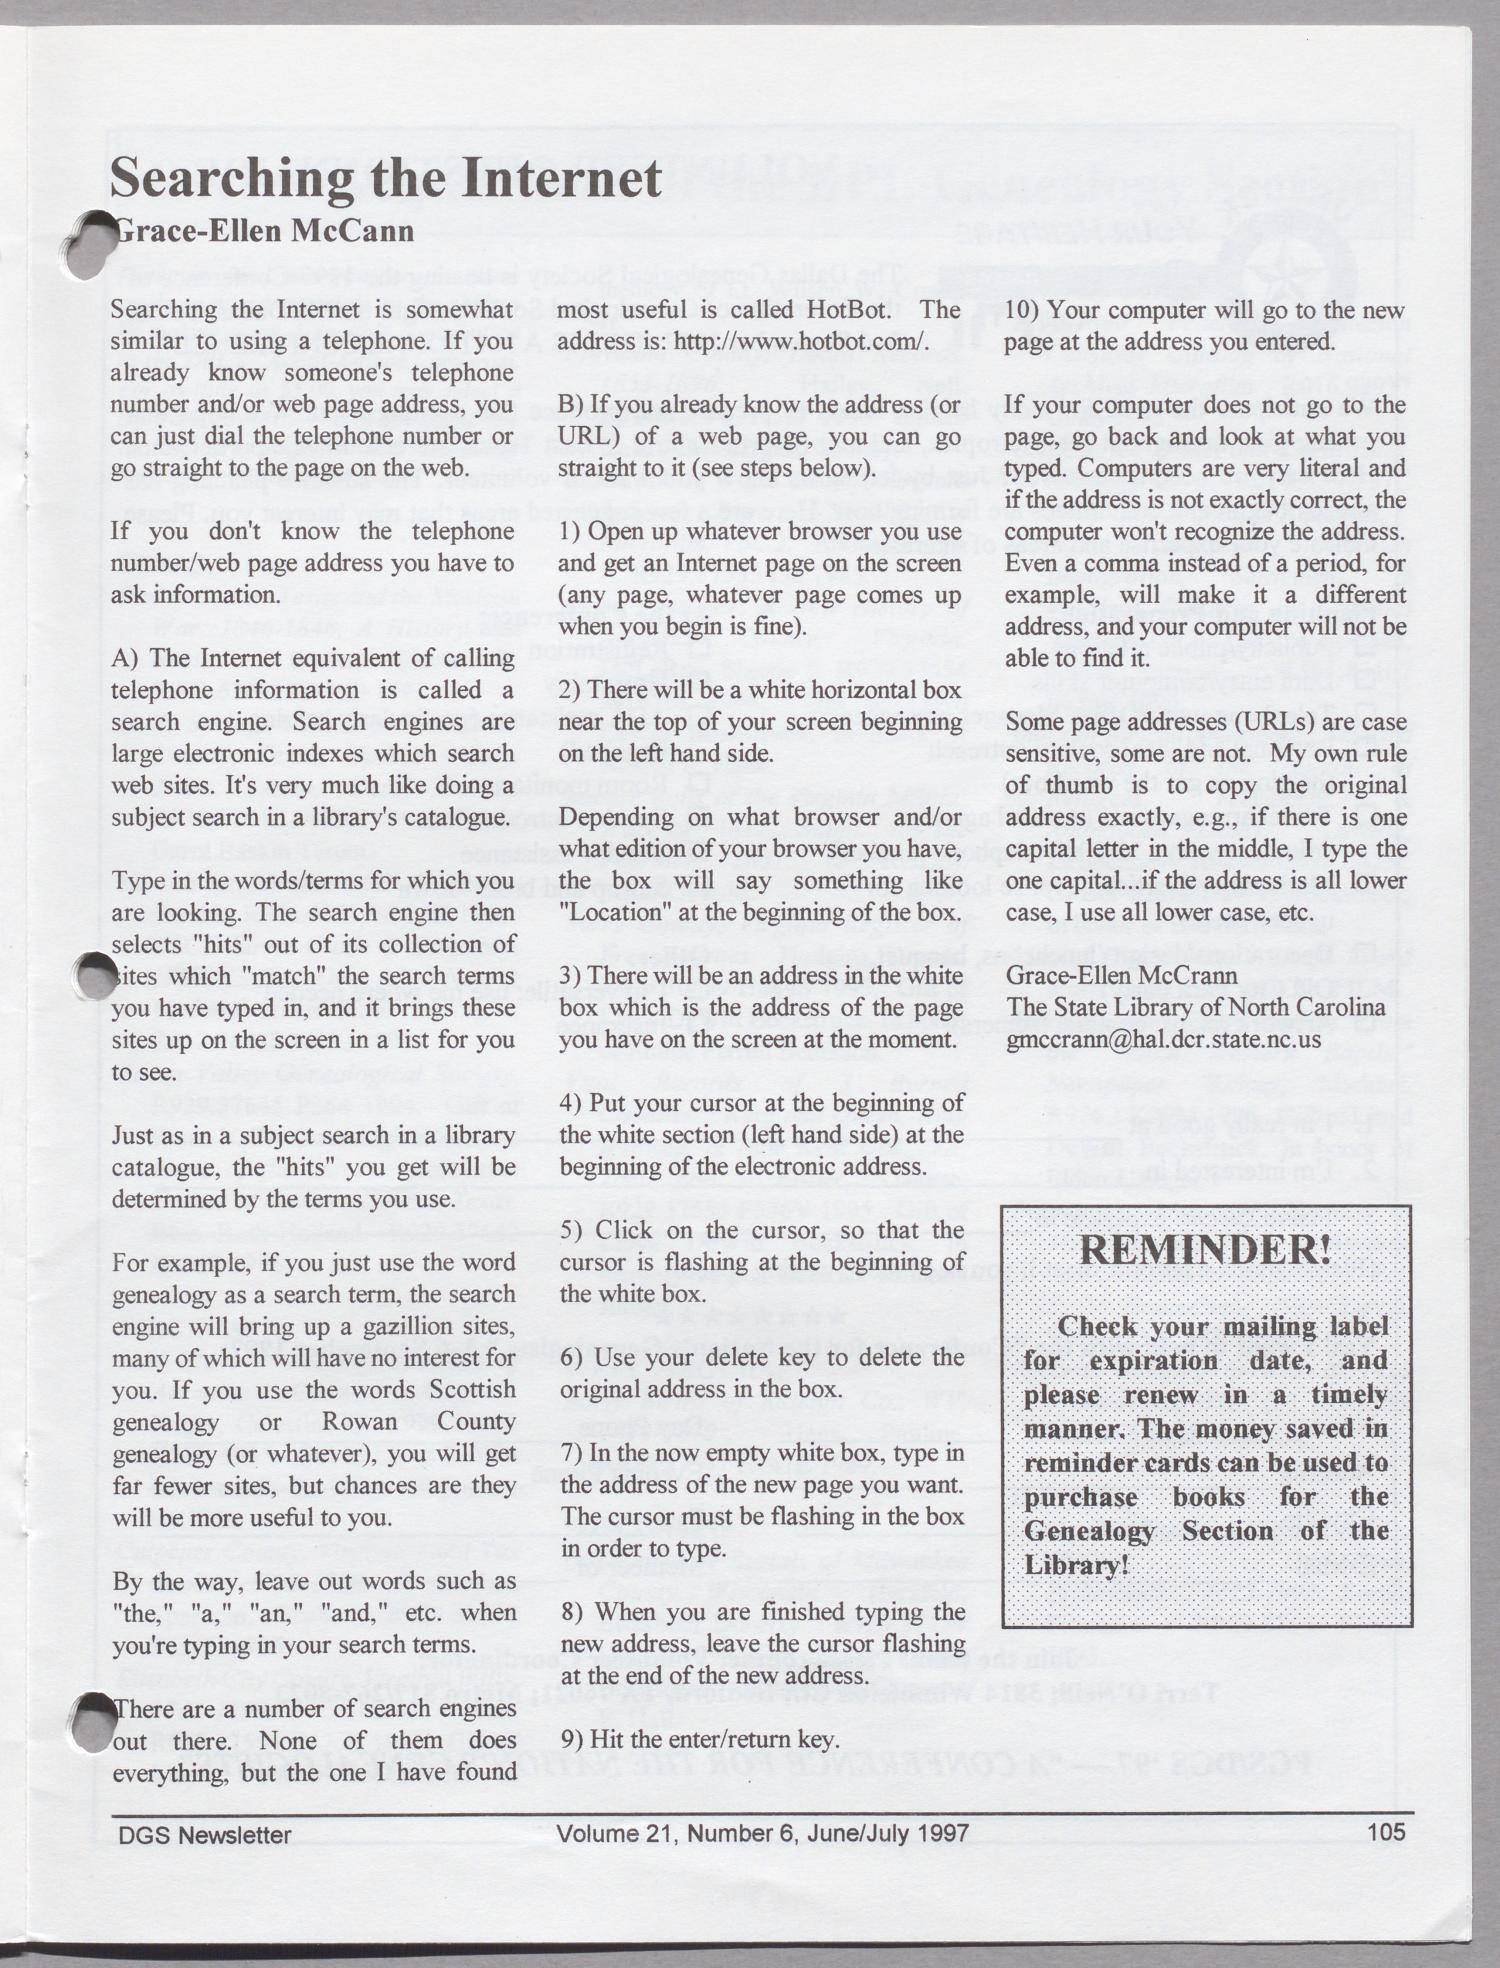 DGS Newsletter, Volume 21, Number 6, June-July 1997
                                                
                                                    105
                                                